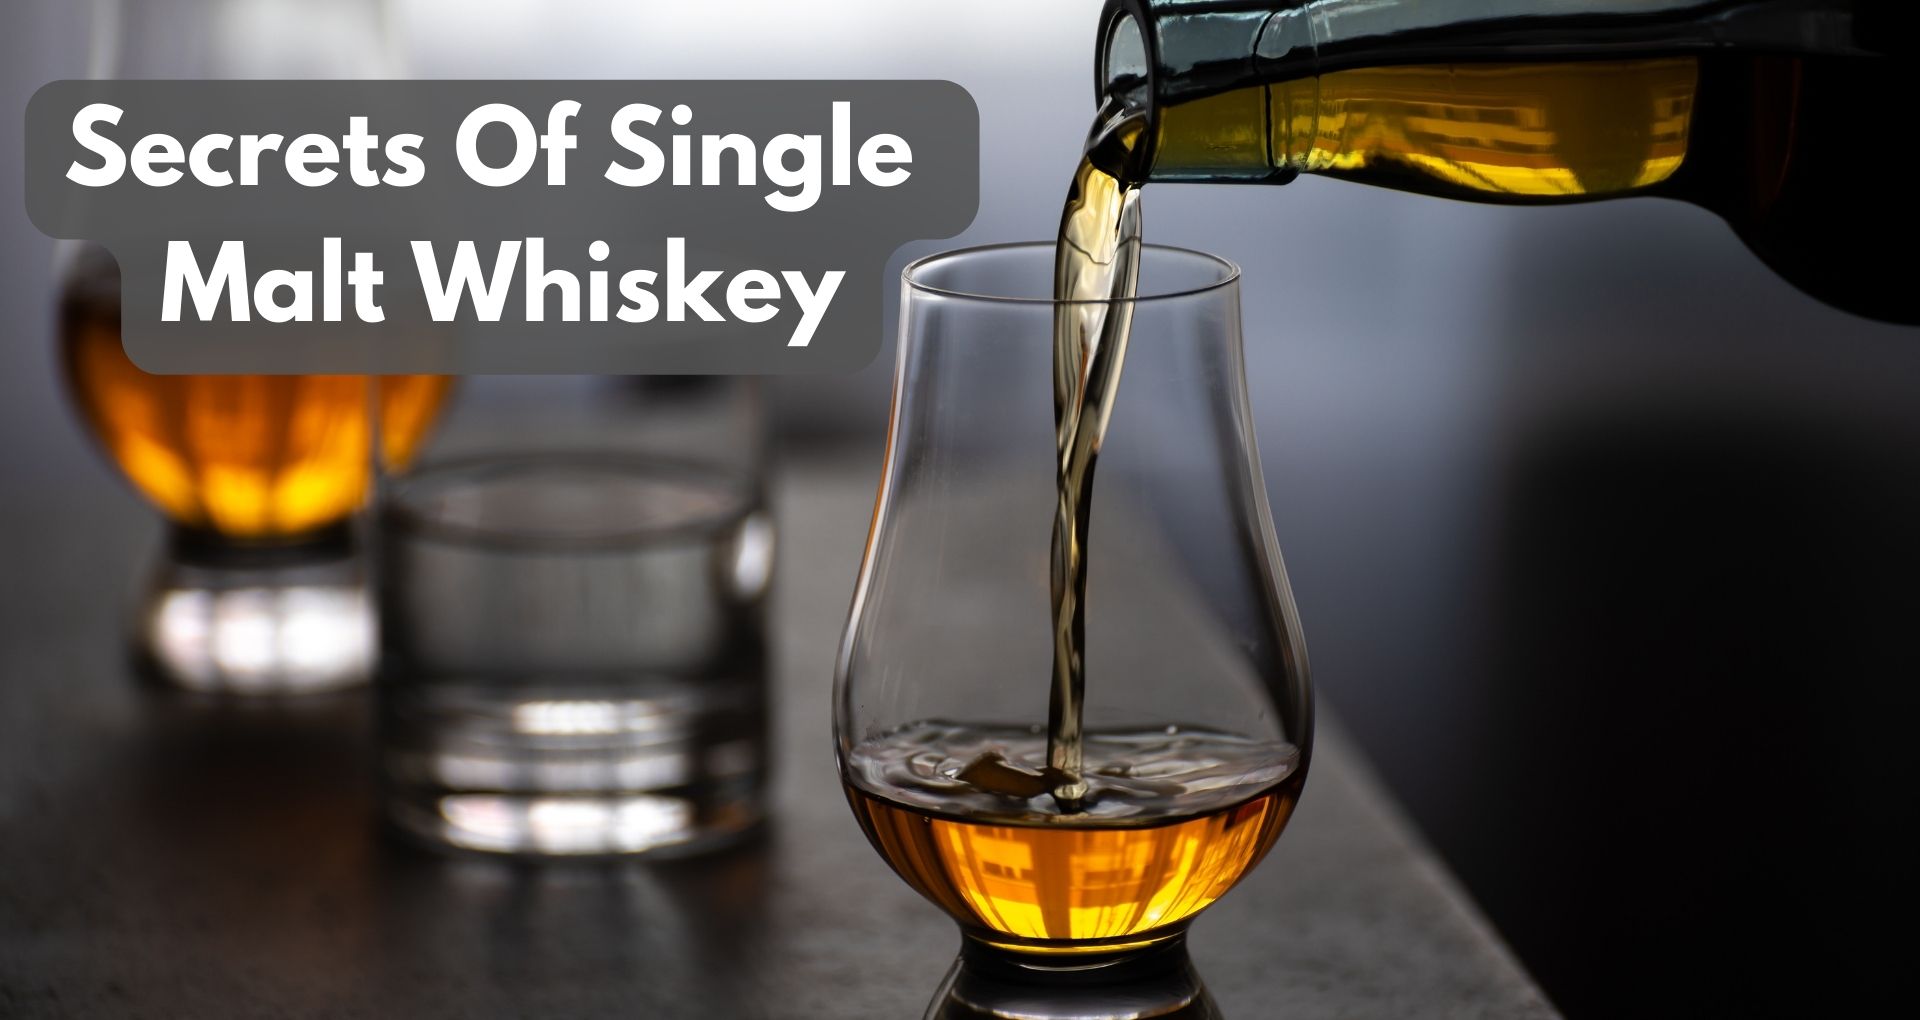 The Secrets Of Single Malt Whiskey